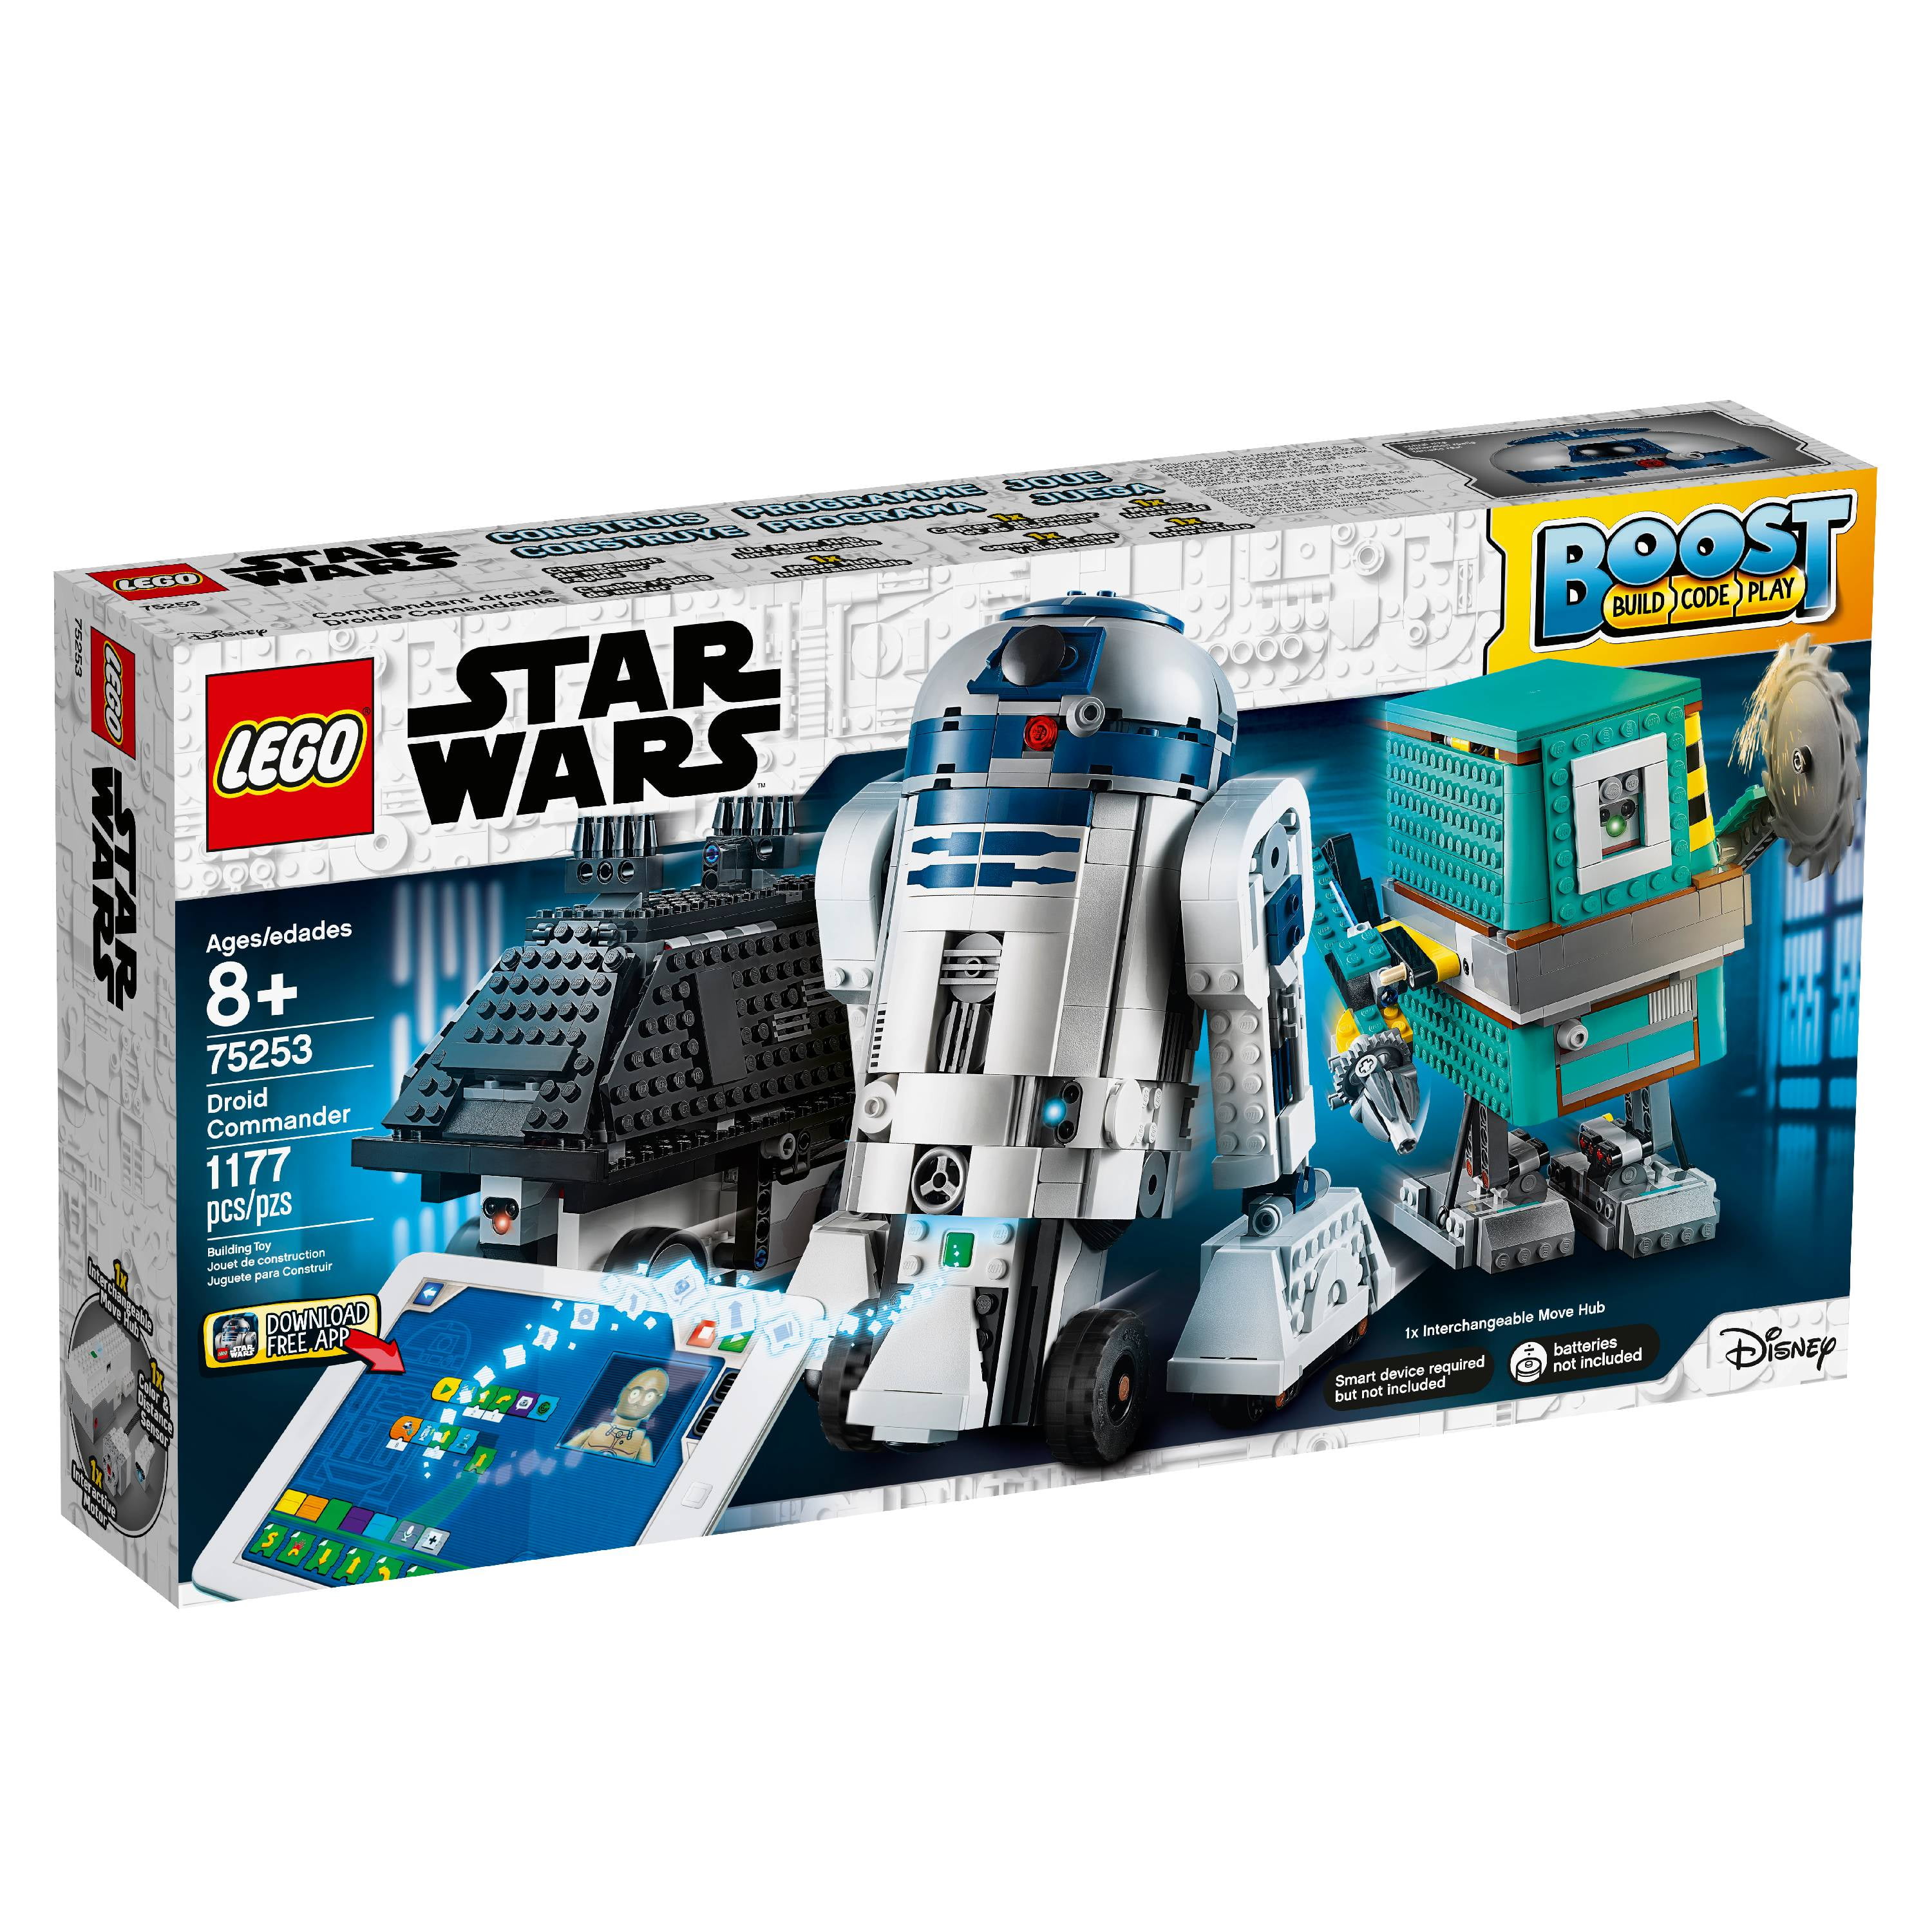 LEGO 75253 Star Wars Boost Droid Commander Coding Educational Set for Kids Walmart.com